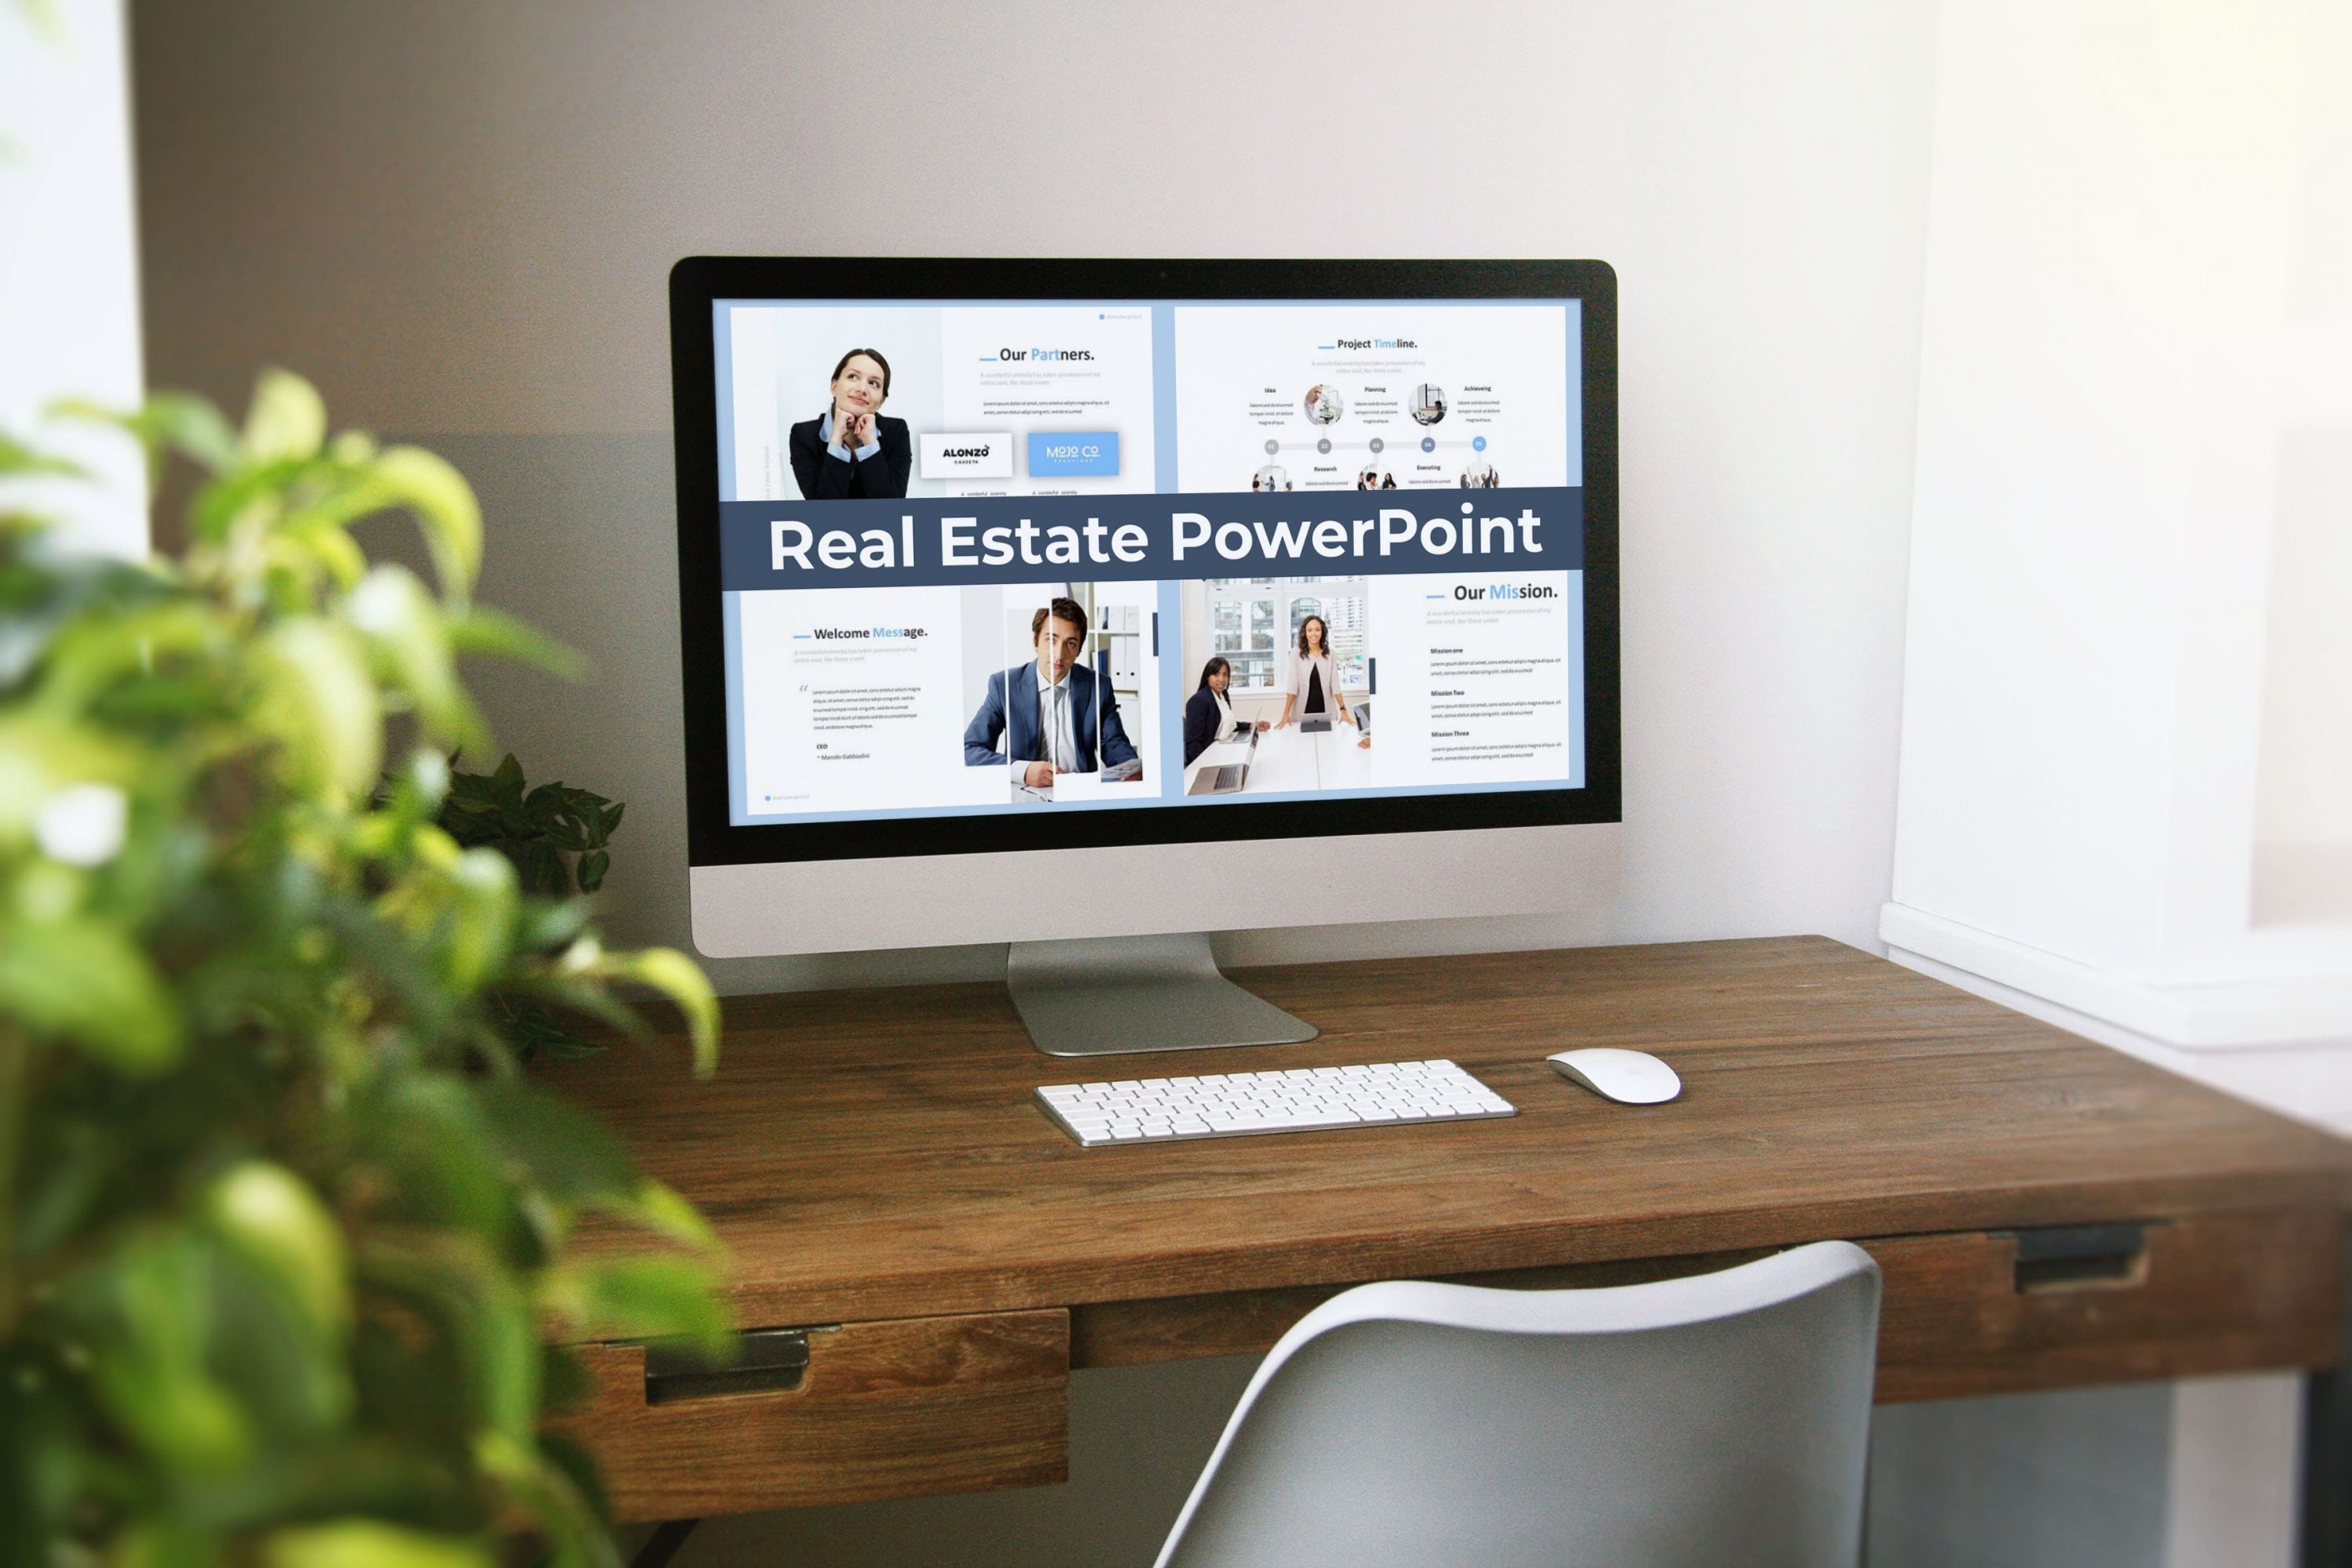 Real Estate Powerpoint Template by MasterBundles Desktop preview mockup image.